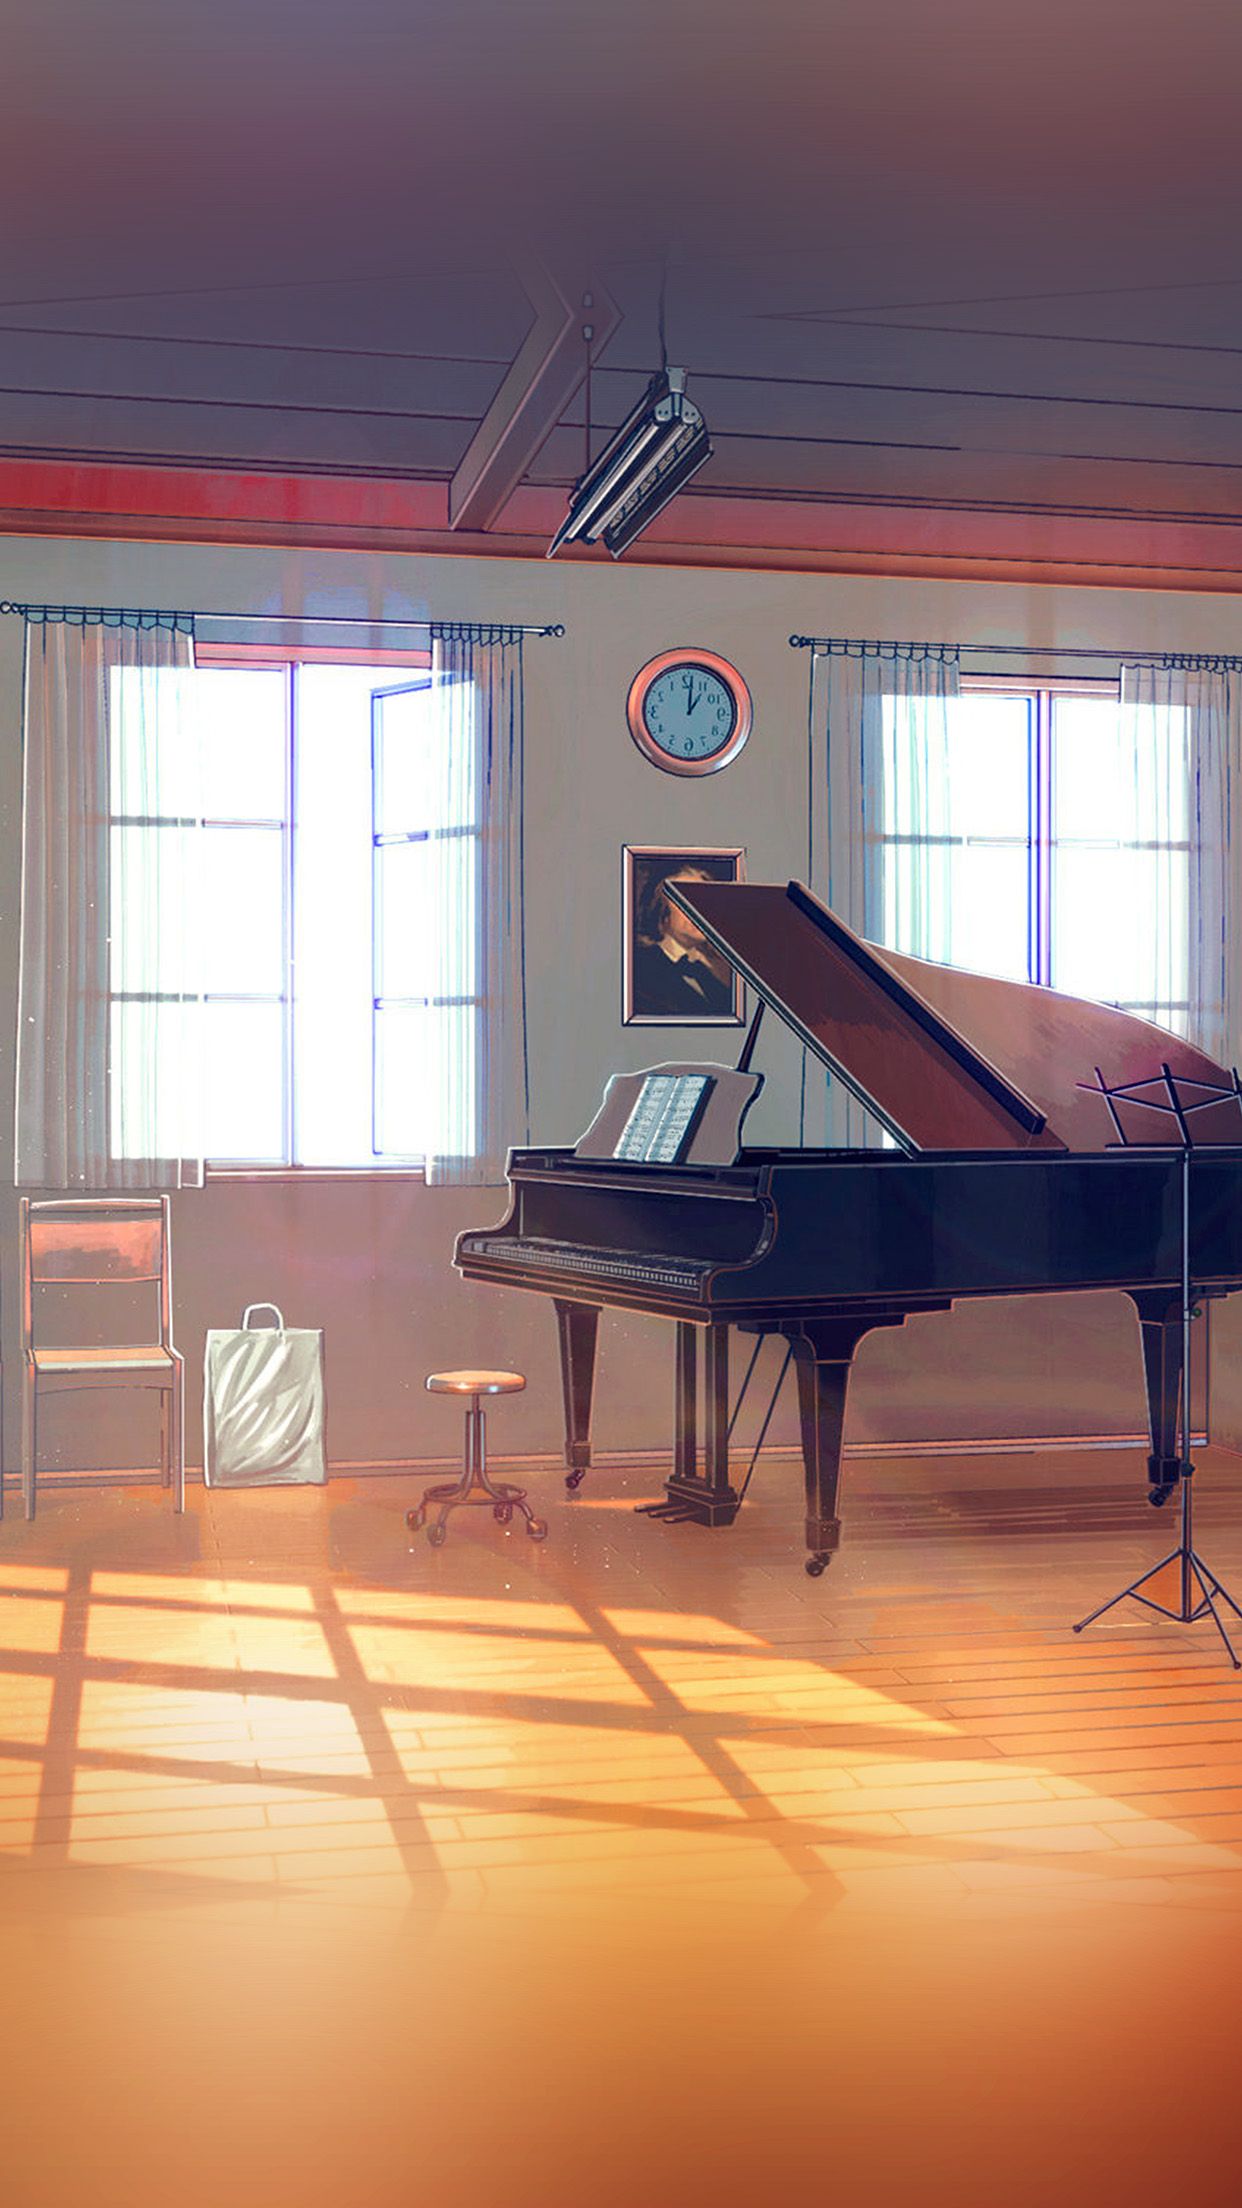  Klavier Anime Hintergrundbild 1242x2208. iPhone X wallpaper. arseniy chebynkin music room piano illustration art blue